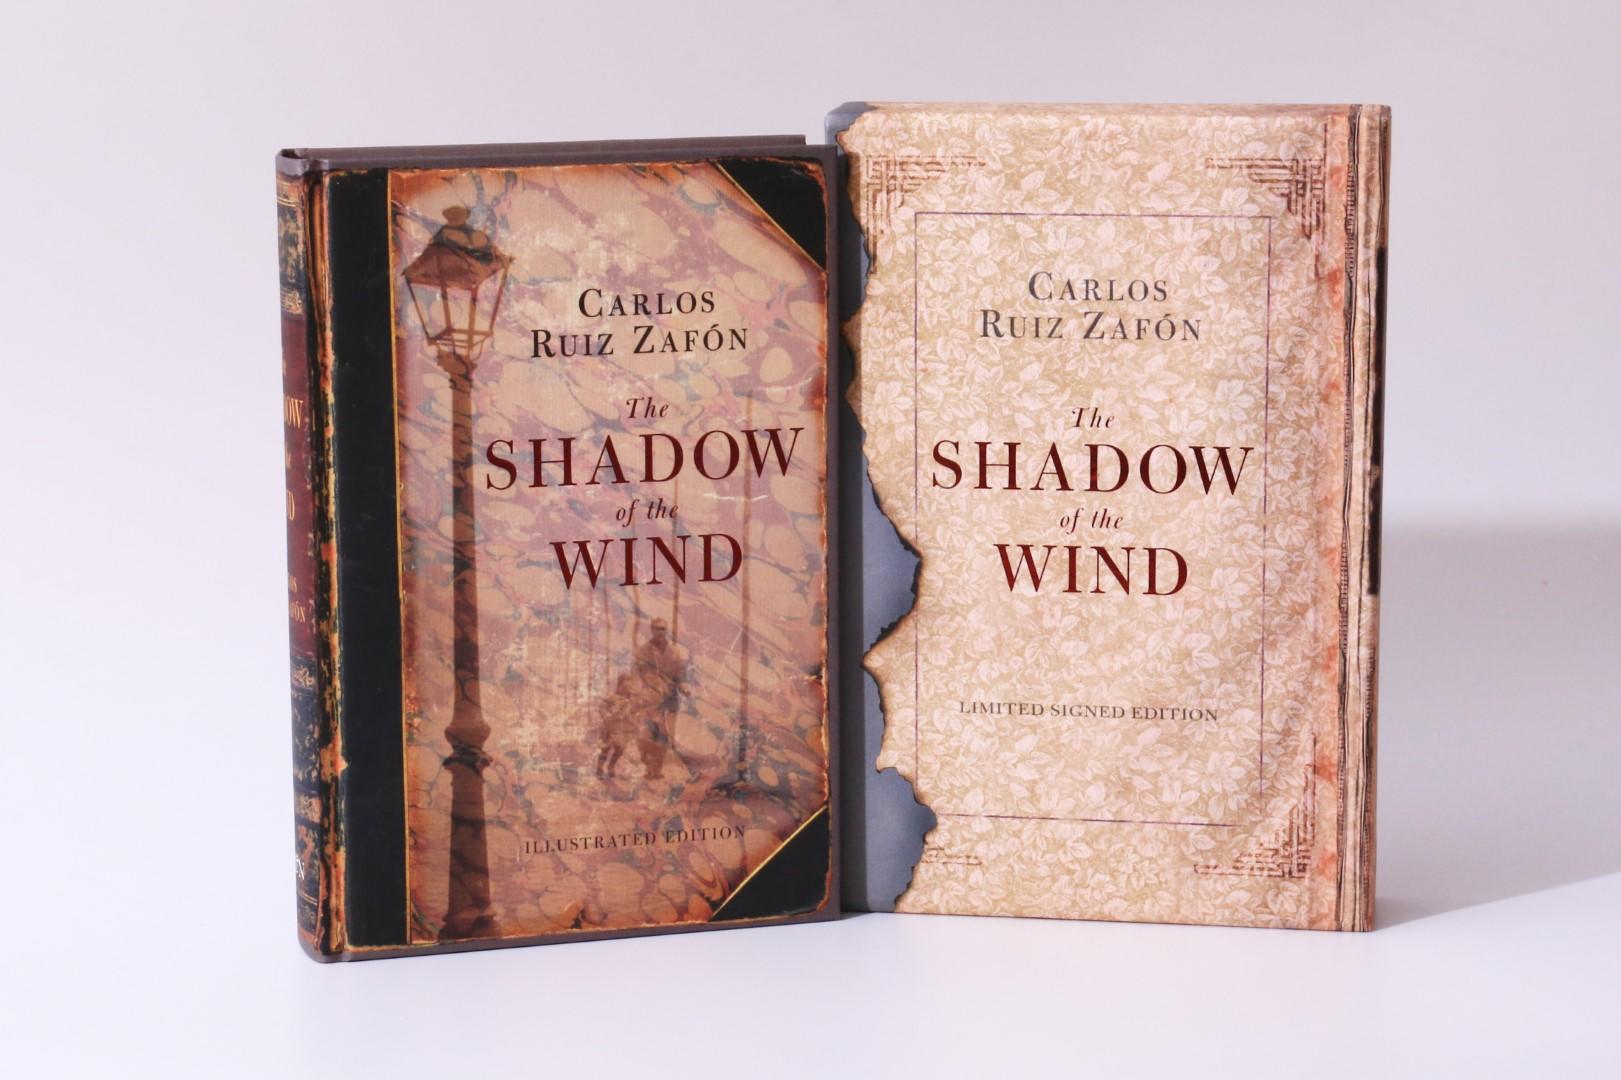 Carlos Ruiz Zafon - The Shadow of the Wind - Weidenfeld & Nicolson, 2005, Signed Limited Edition.